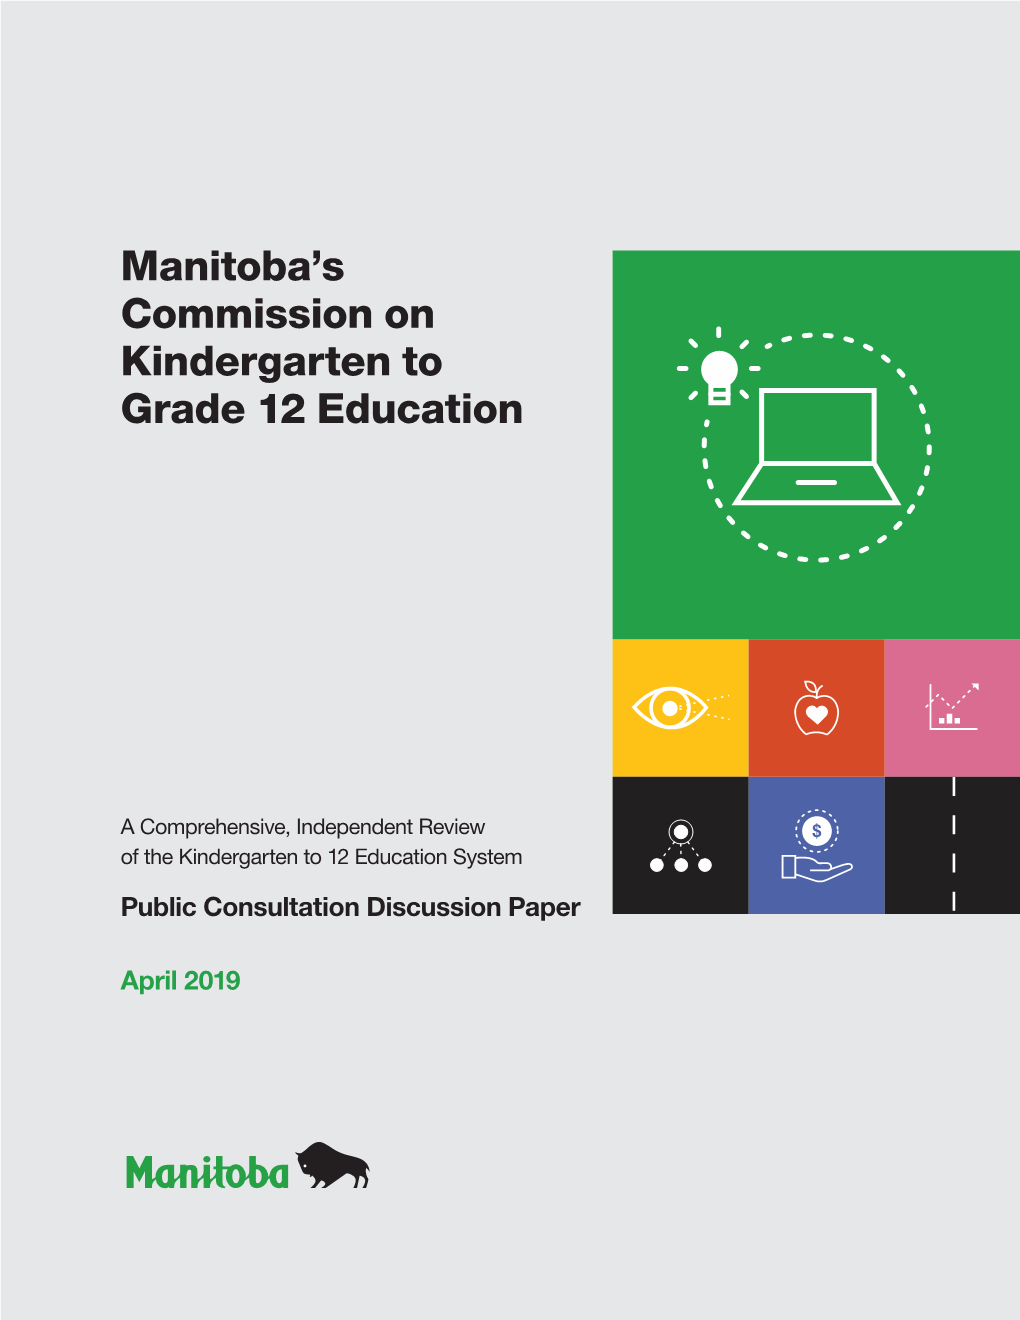 Manitoba's Commission on Kindergarten